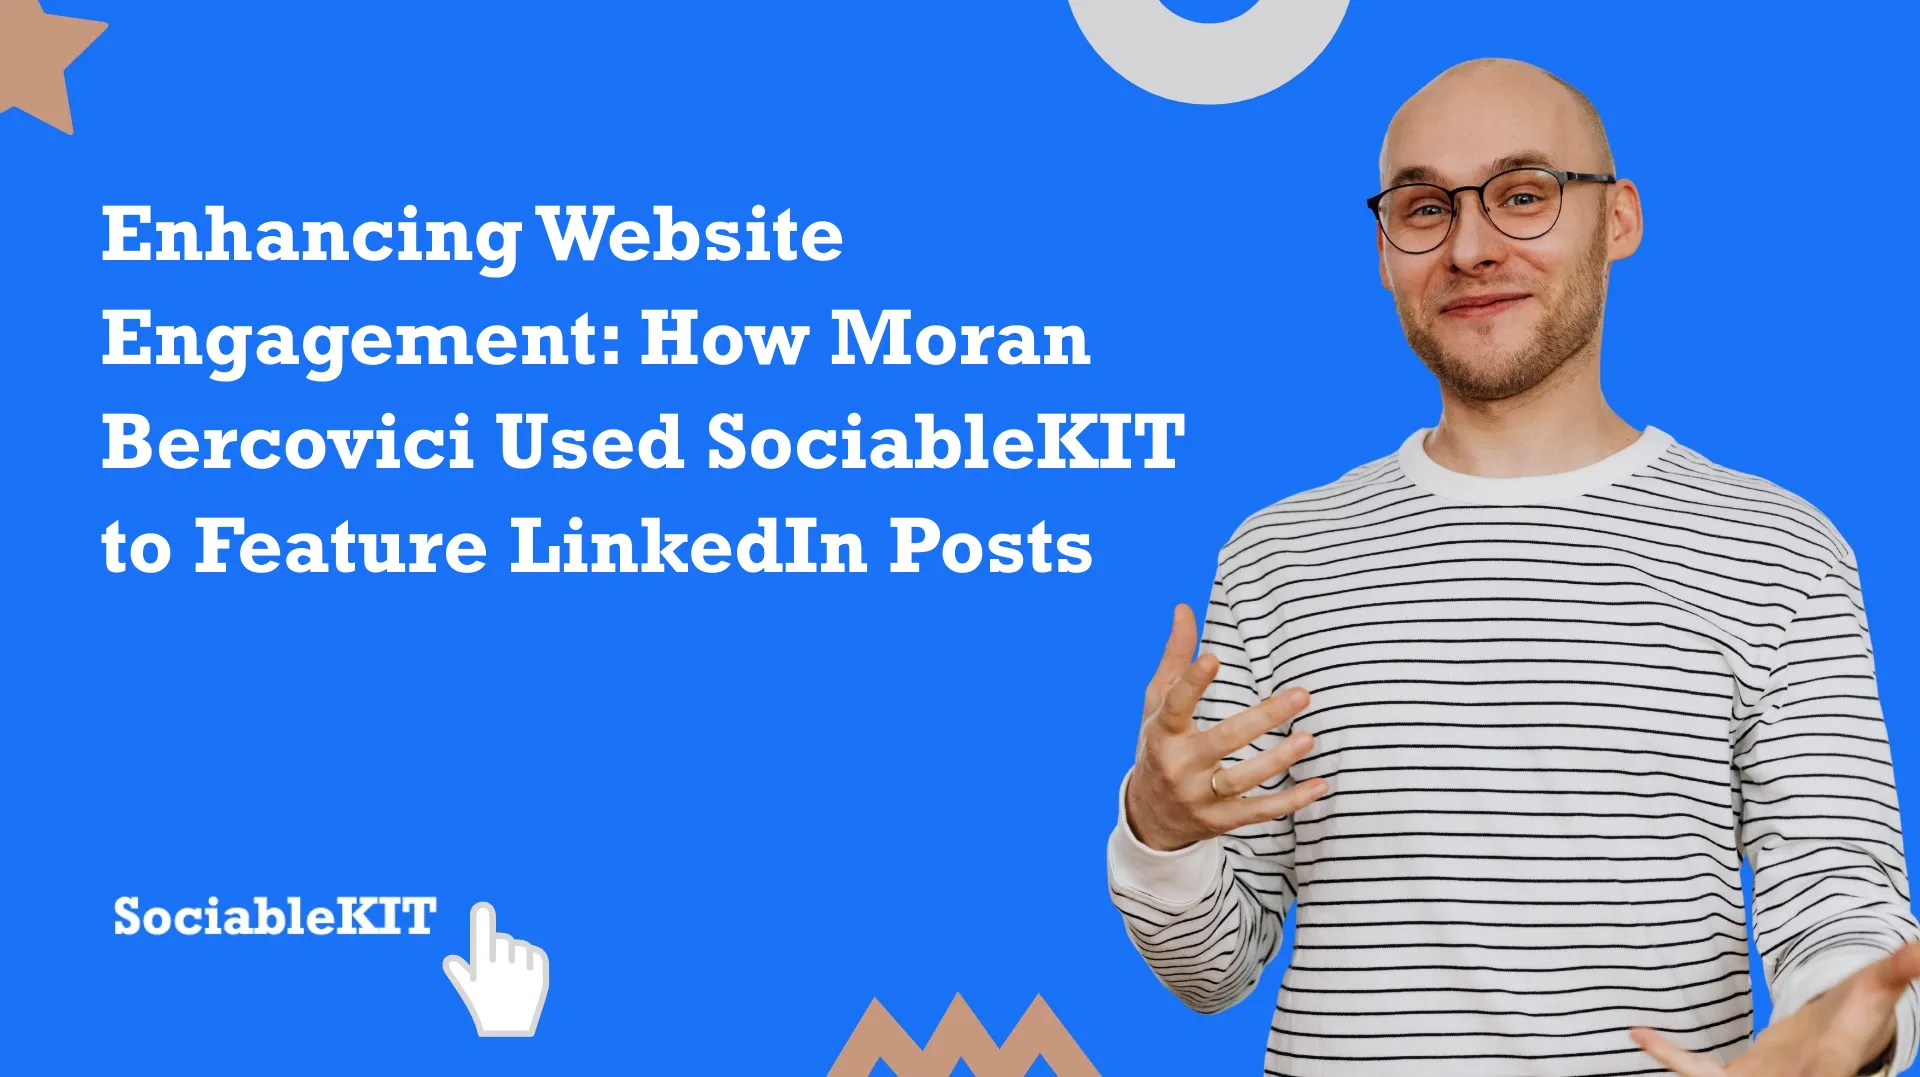 Enhancing Website Engagement: How Moran Bercovici Used SociableKIT to Feature LinkedIn Posts